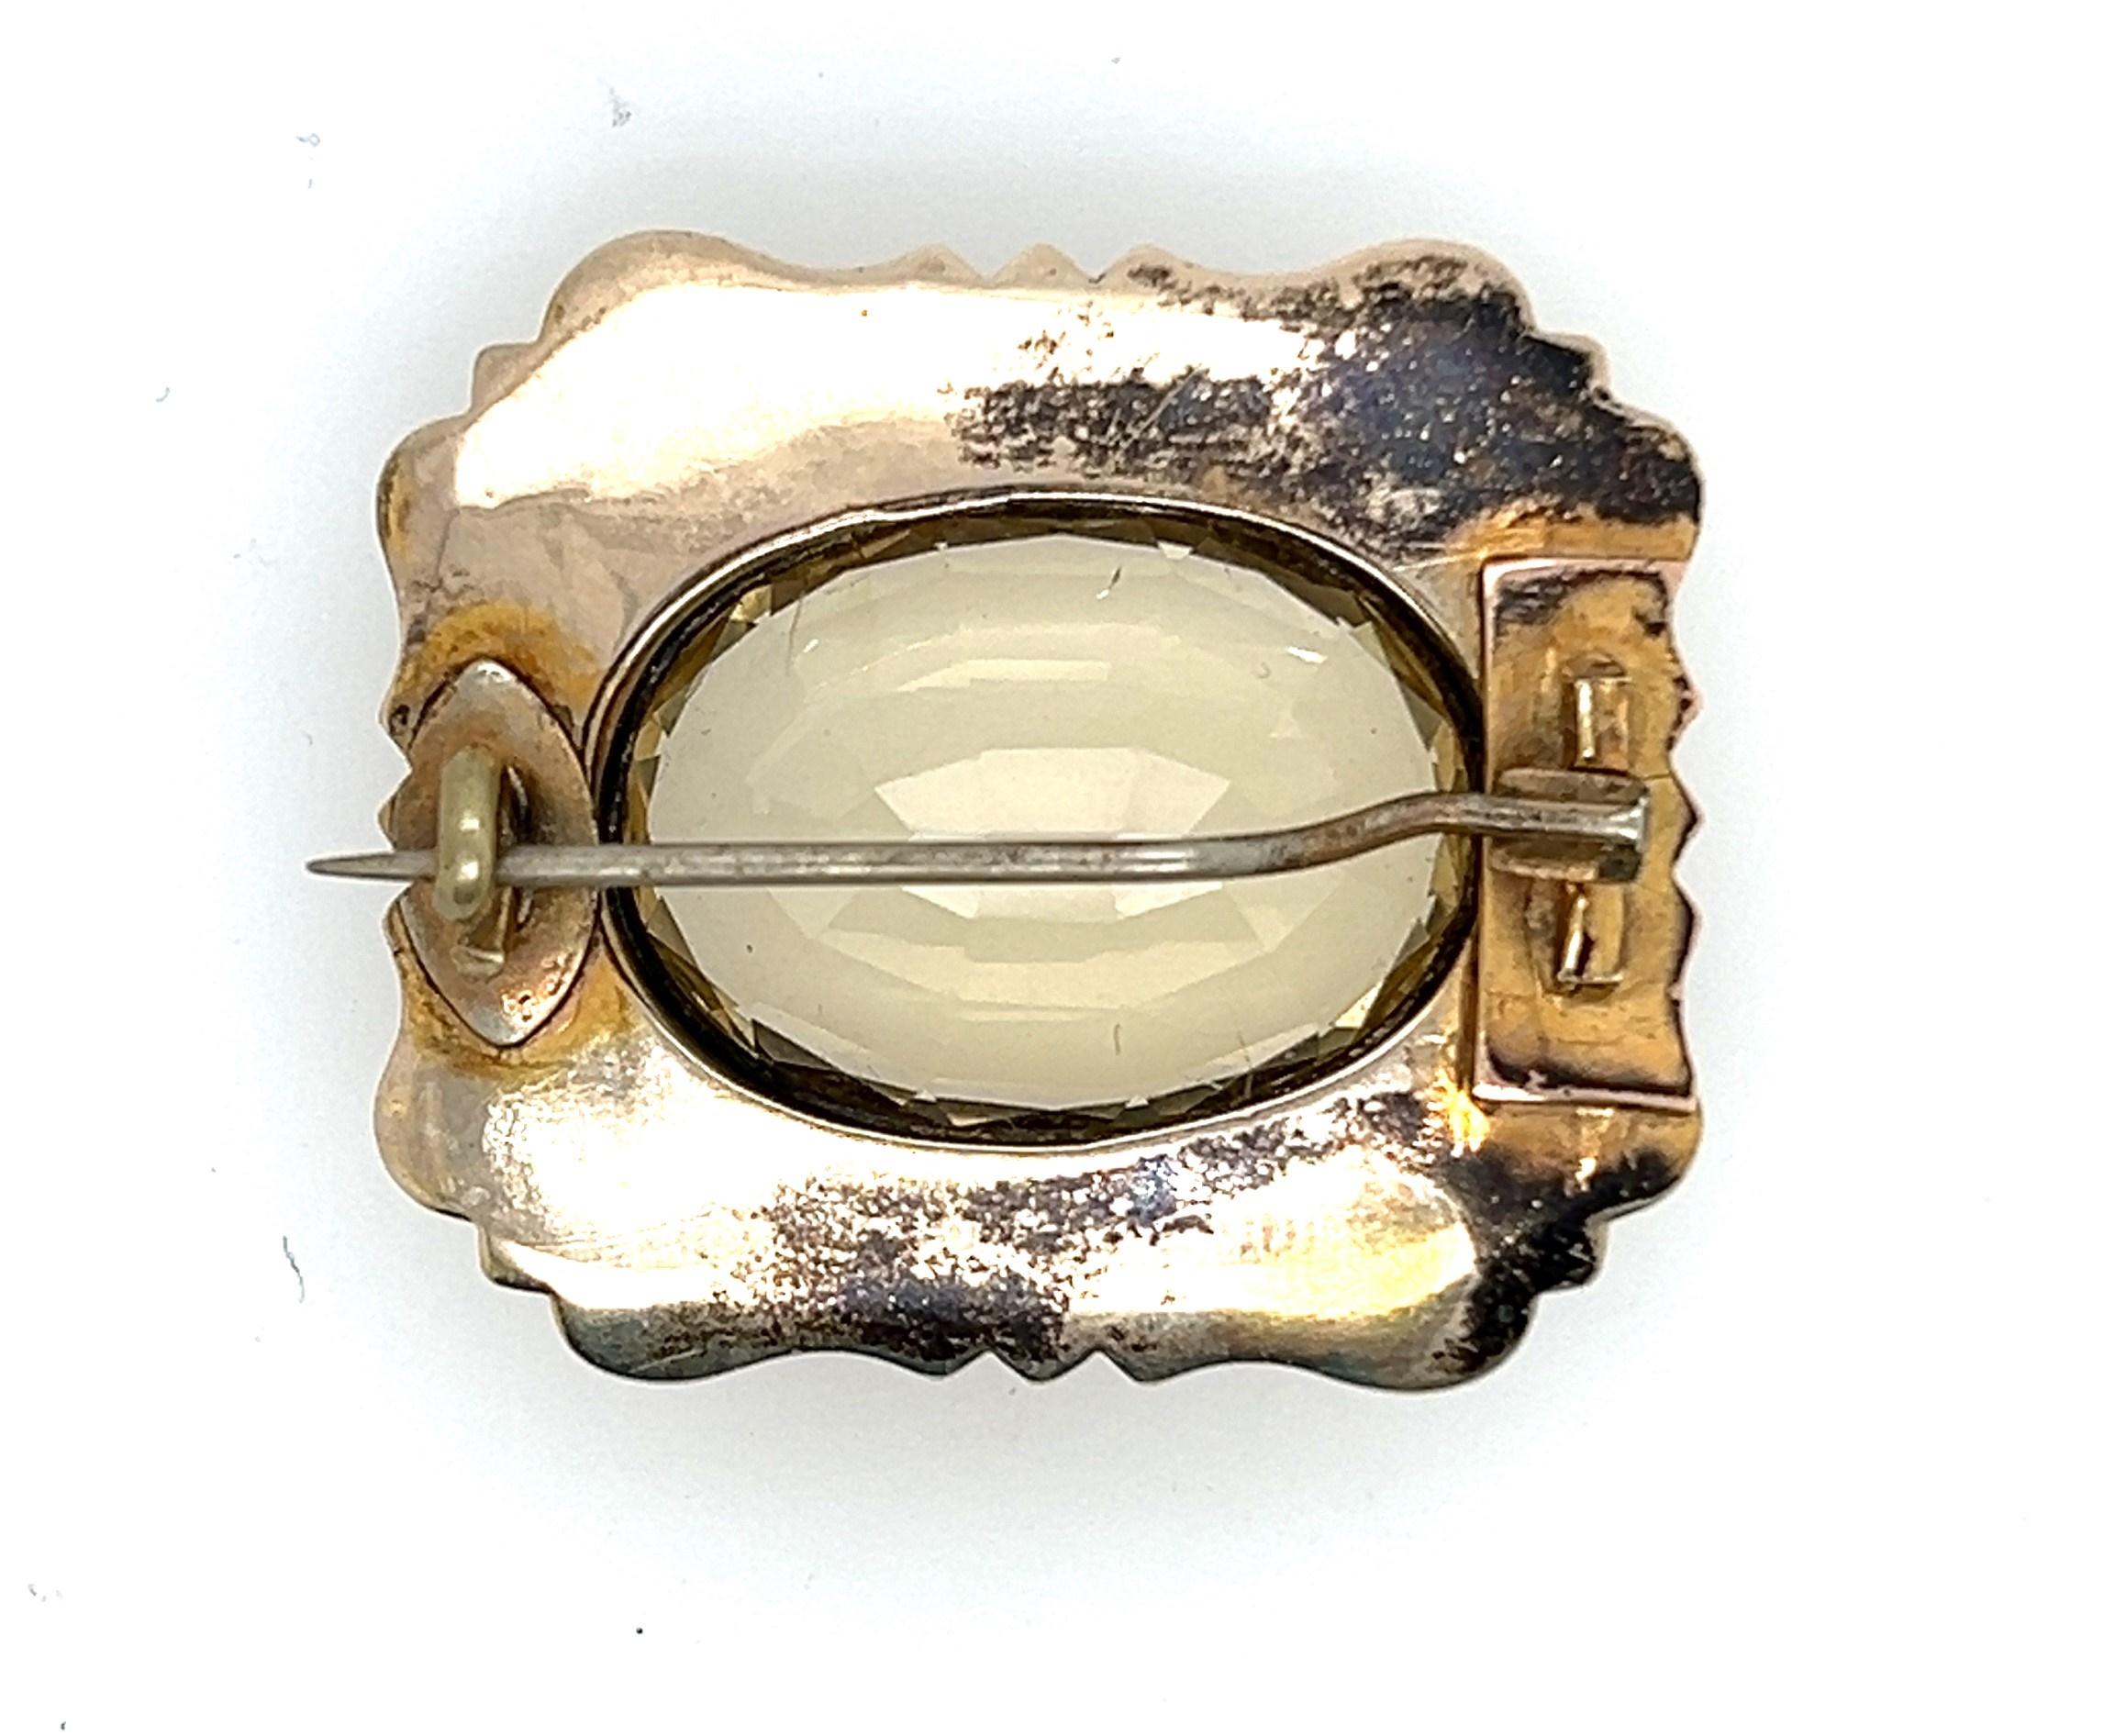 Oval Cut Antique 1880s Repousse Citrine Brooch For Sale